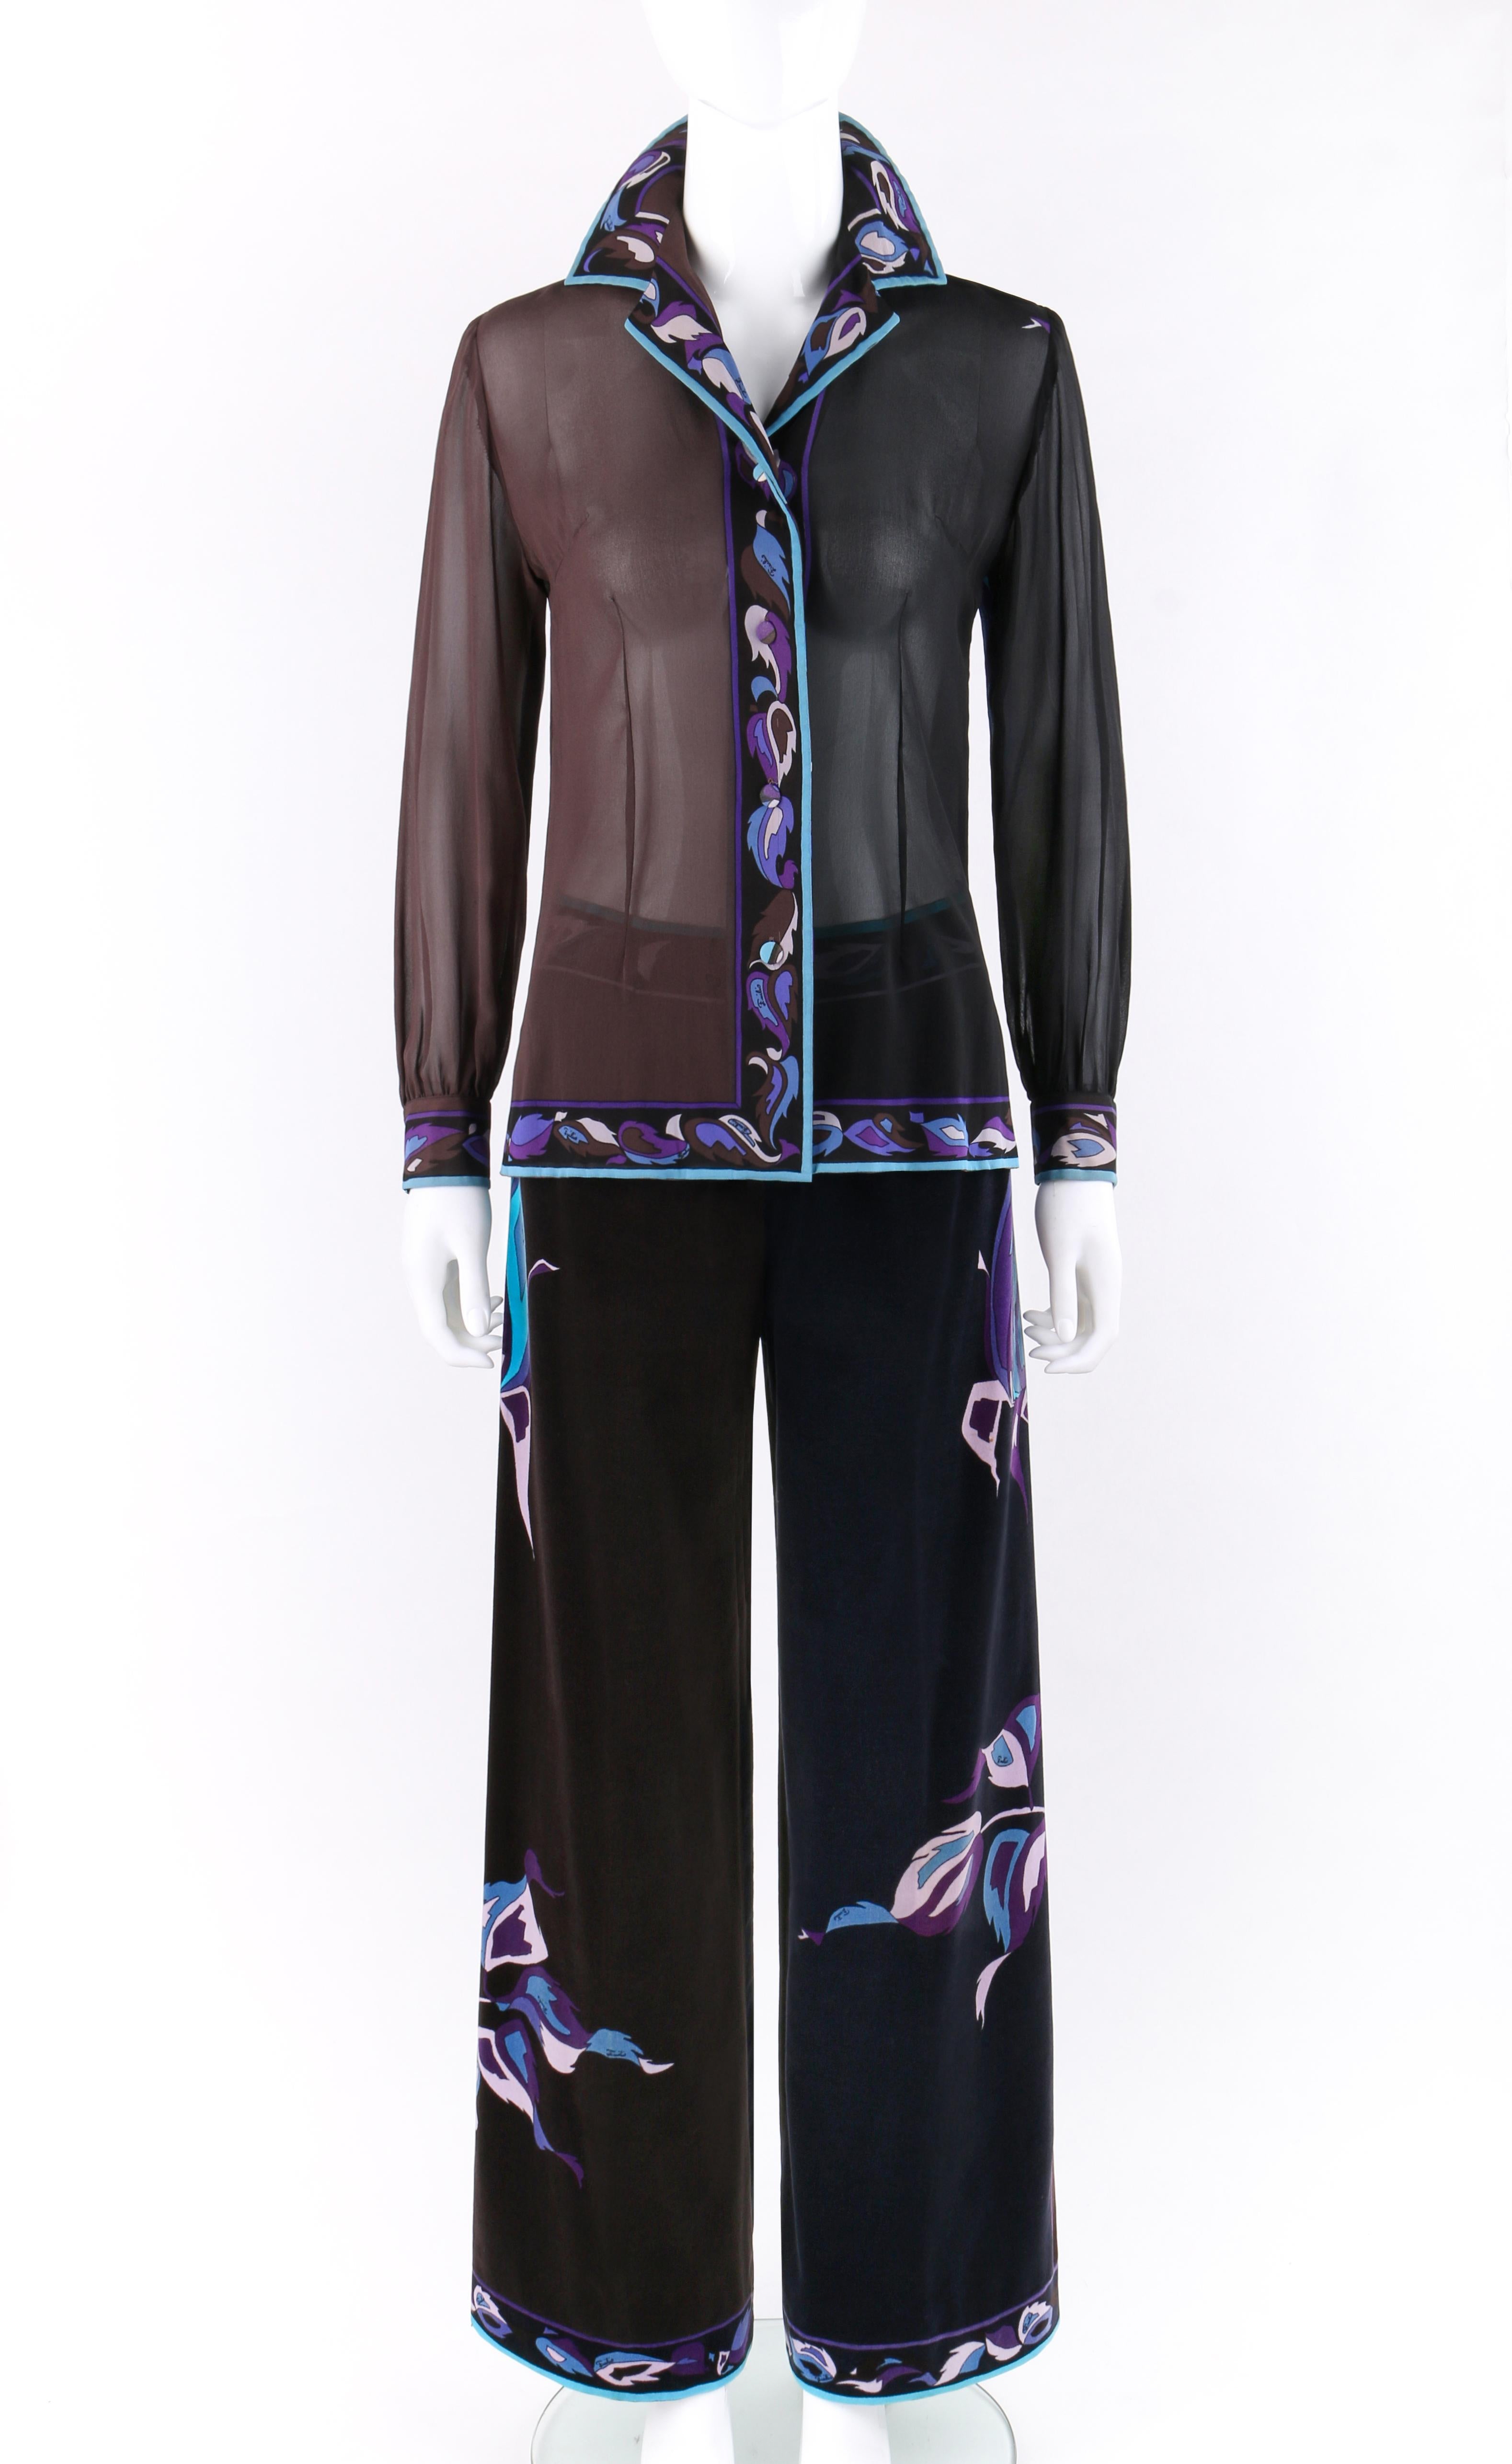 EMILIO PUCCI c.1960-70’s 2pc Multicolor Rose Silk Velvet Blouse Pant Set
 
Circa: 1970’s - Top, 1960’s - Pant
Label(s): Emilio Pucci / Exclusively for Saks Fifth Avenue
Style: Ensemble 
Color(s): Shades of purple, blue, brown, black, and